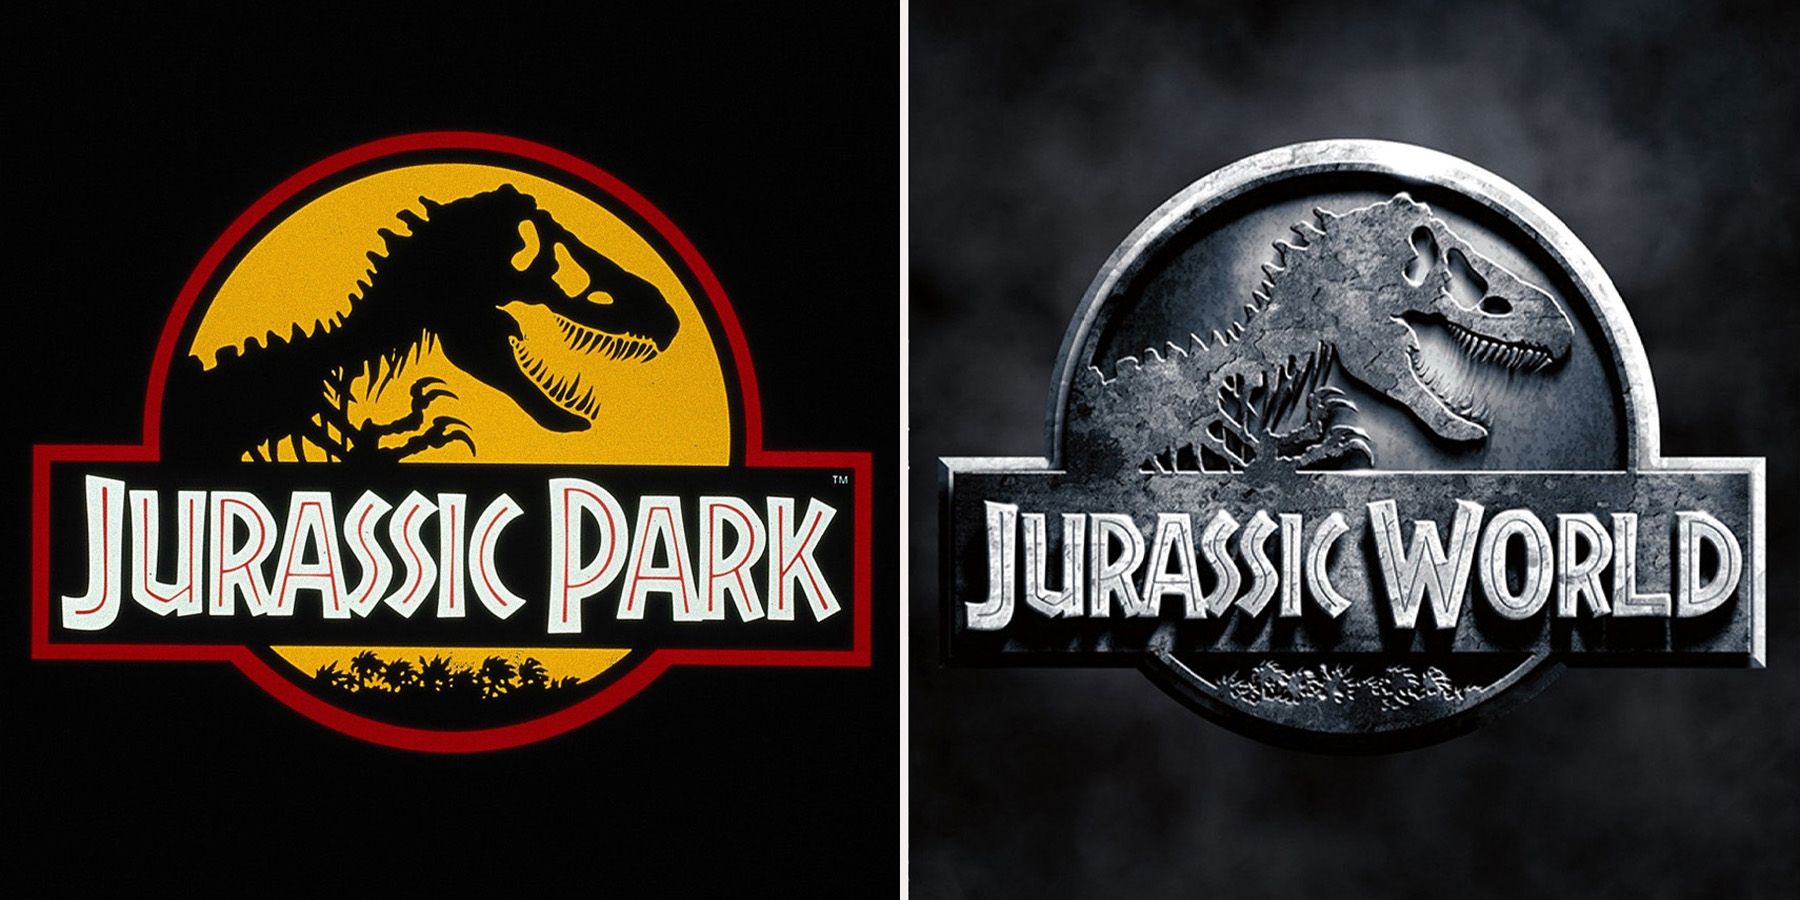 jurassic park vs jurassic world better trilogy featured image